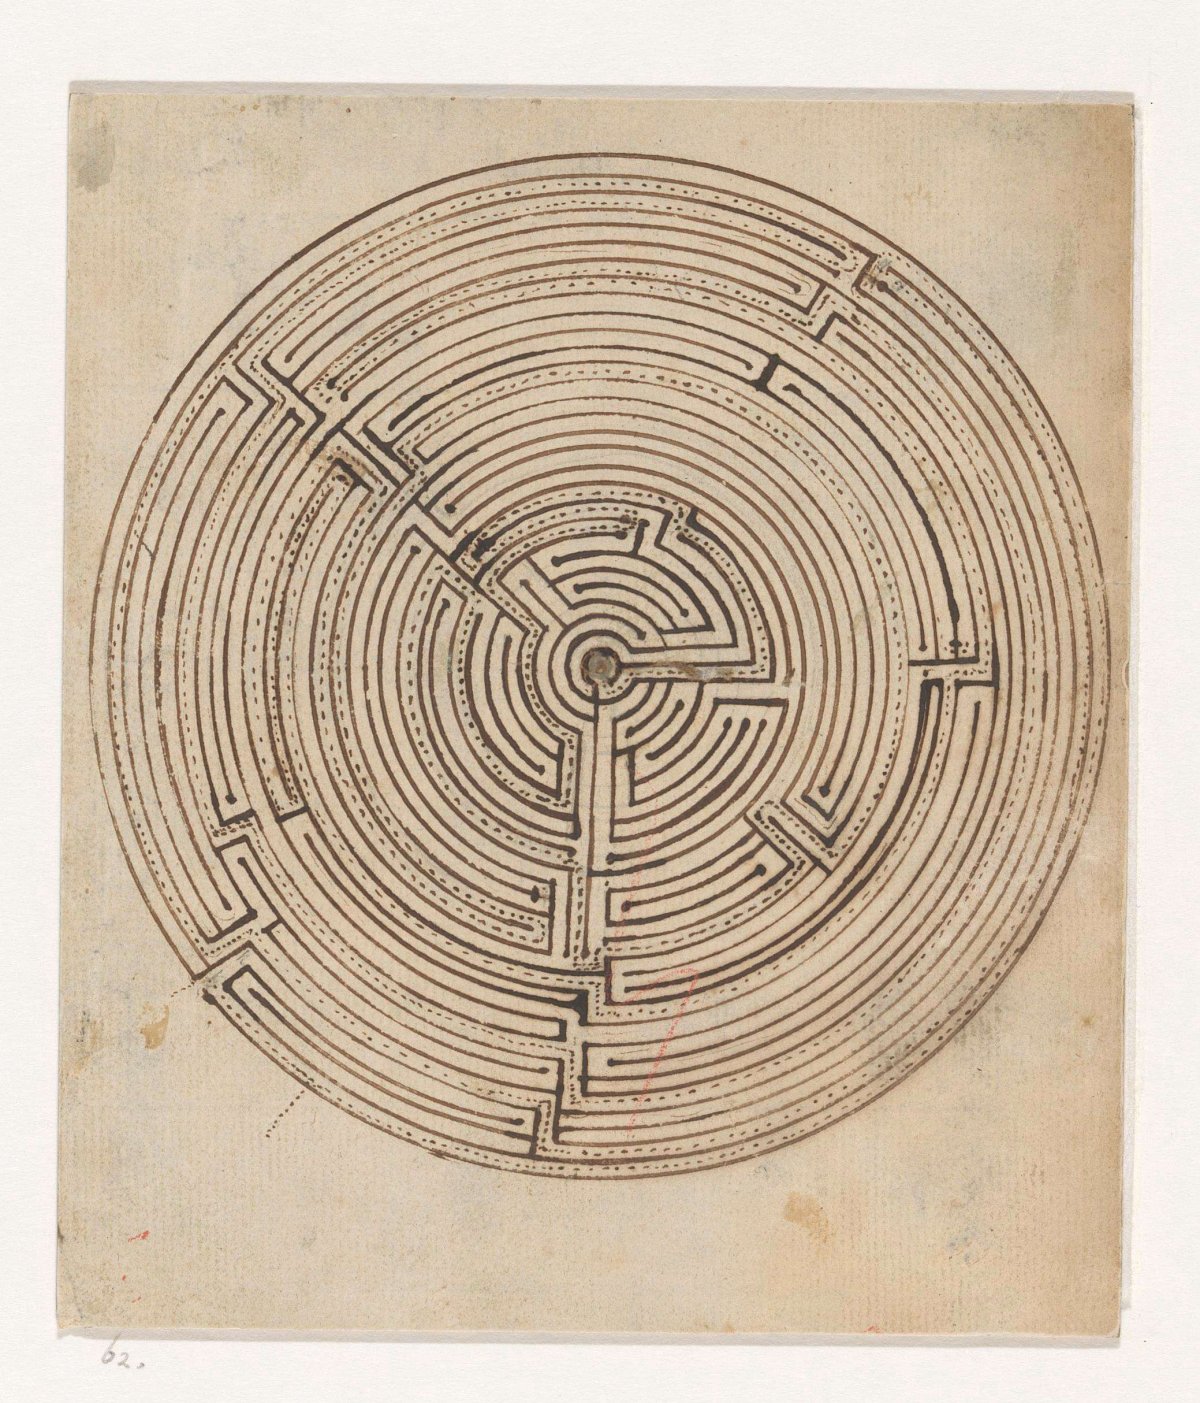 Labyrint, Jan Brandes, 1770 - 1808